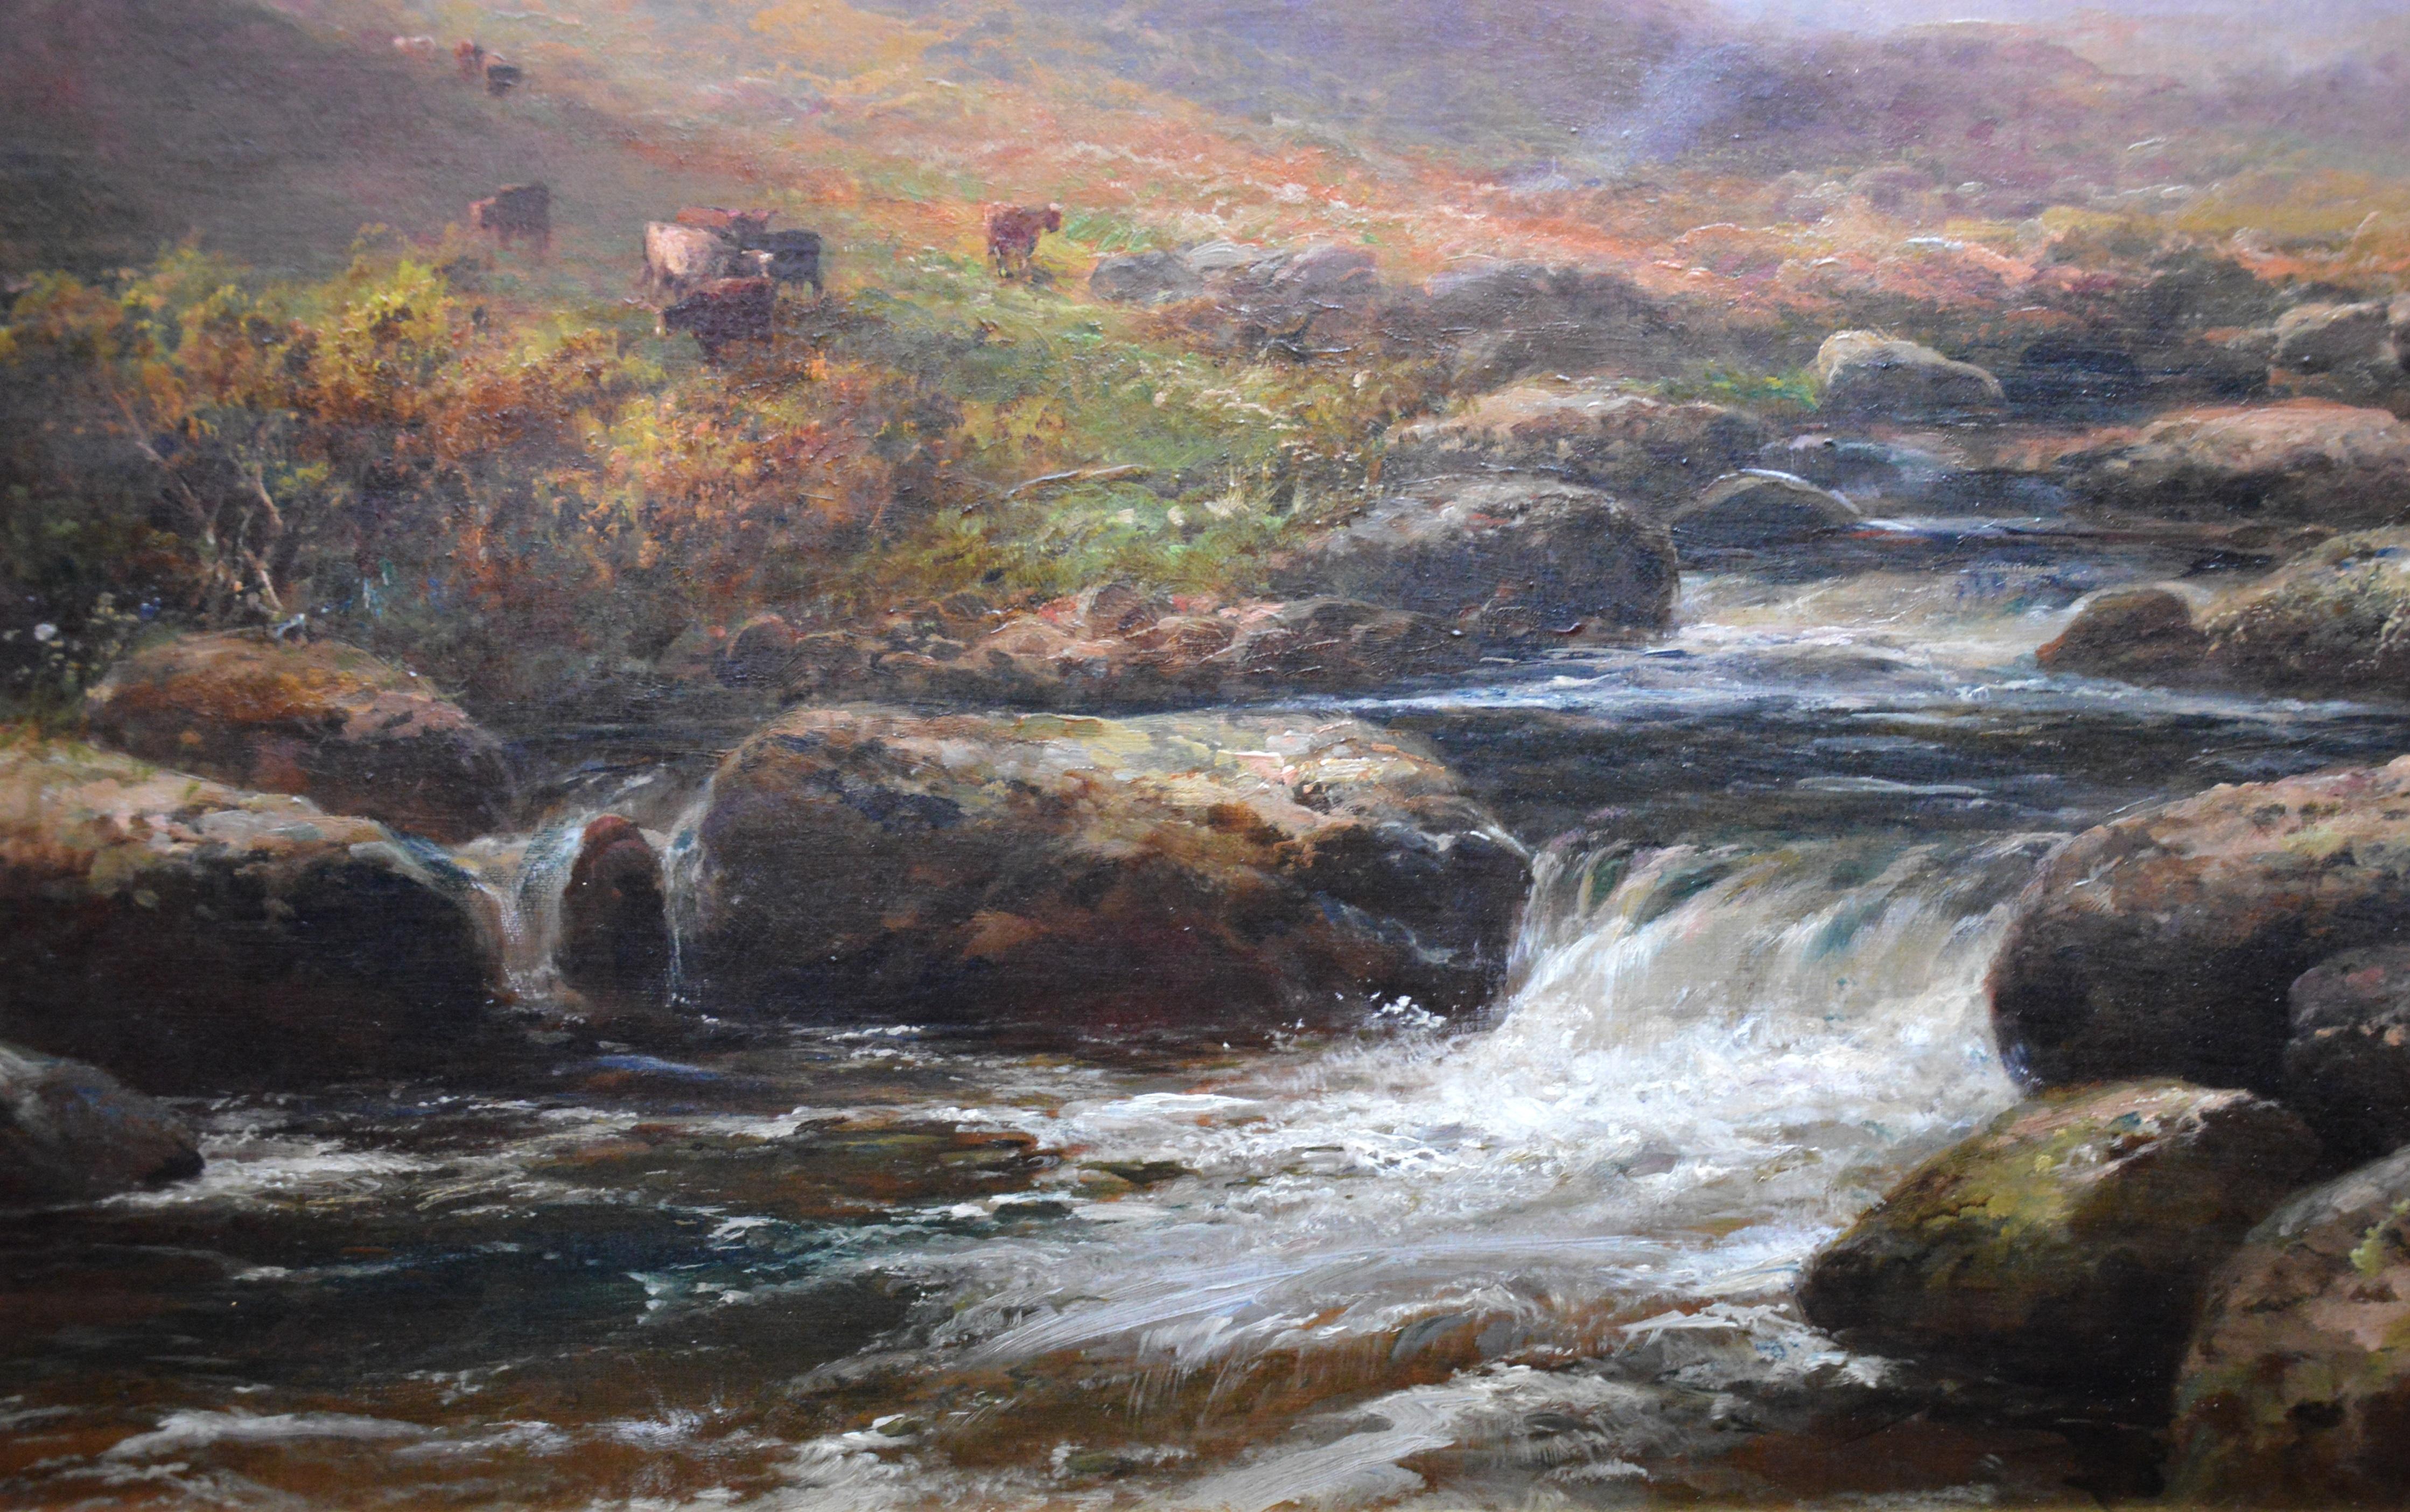 On the Tavy - 19th Century Landscape Oil Painting of Dartmoor Sherlock Holmes 2